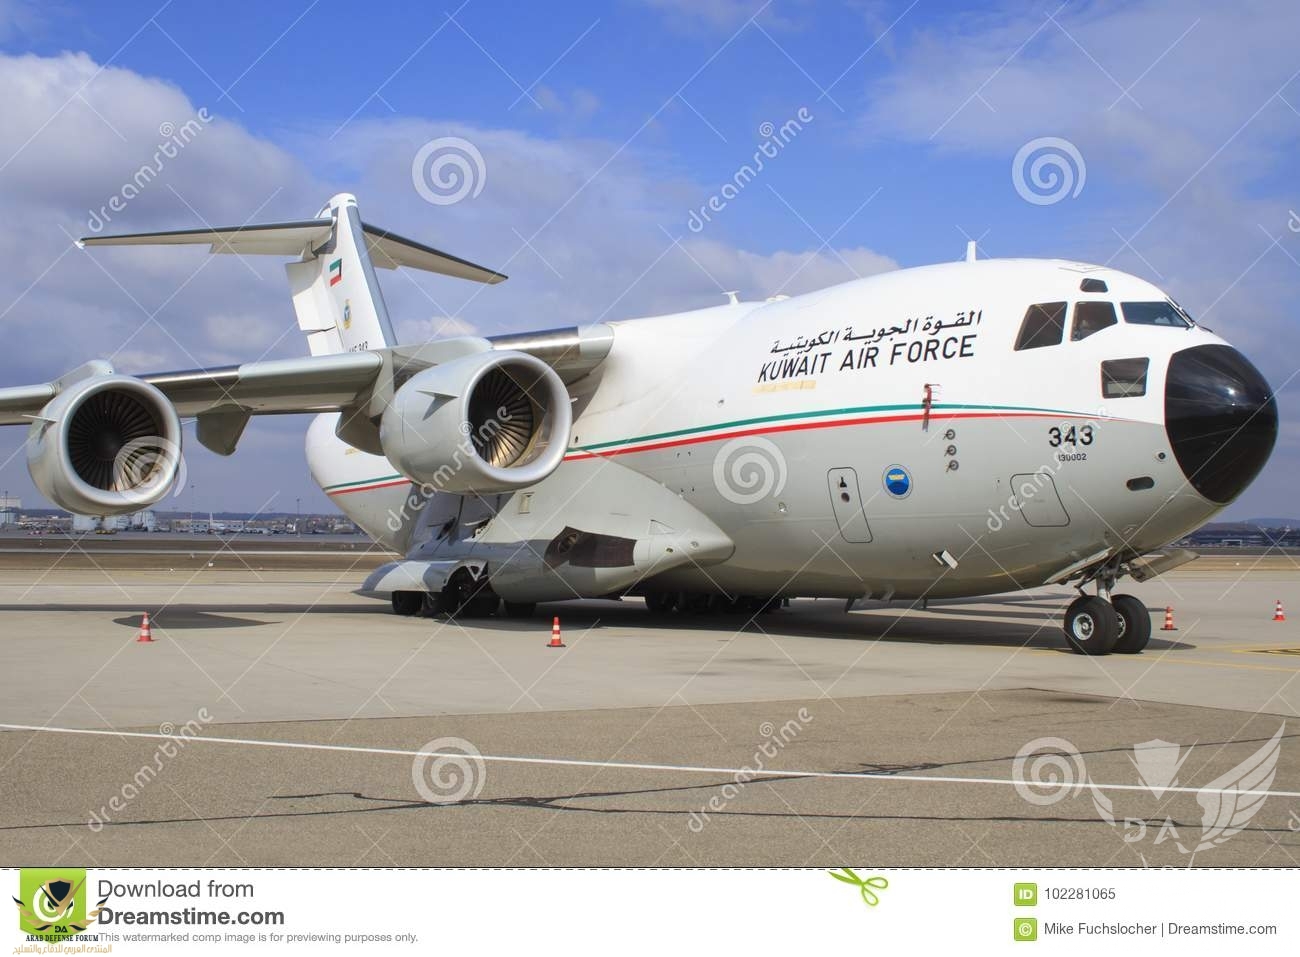 stuttgart-germany-march-kuwait-air-force-boeing-c-globemaster-iii-stuttgart-airport-kuwait-air...jpg